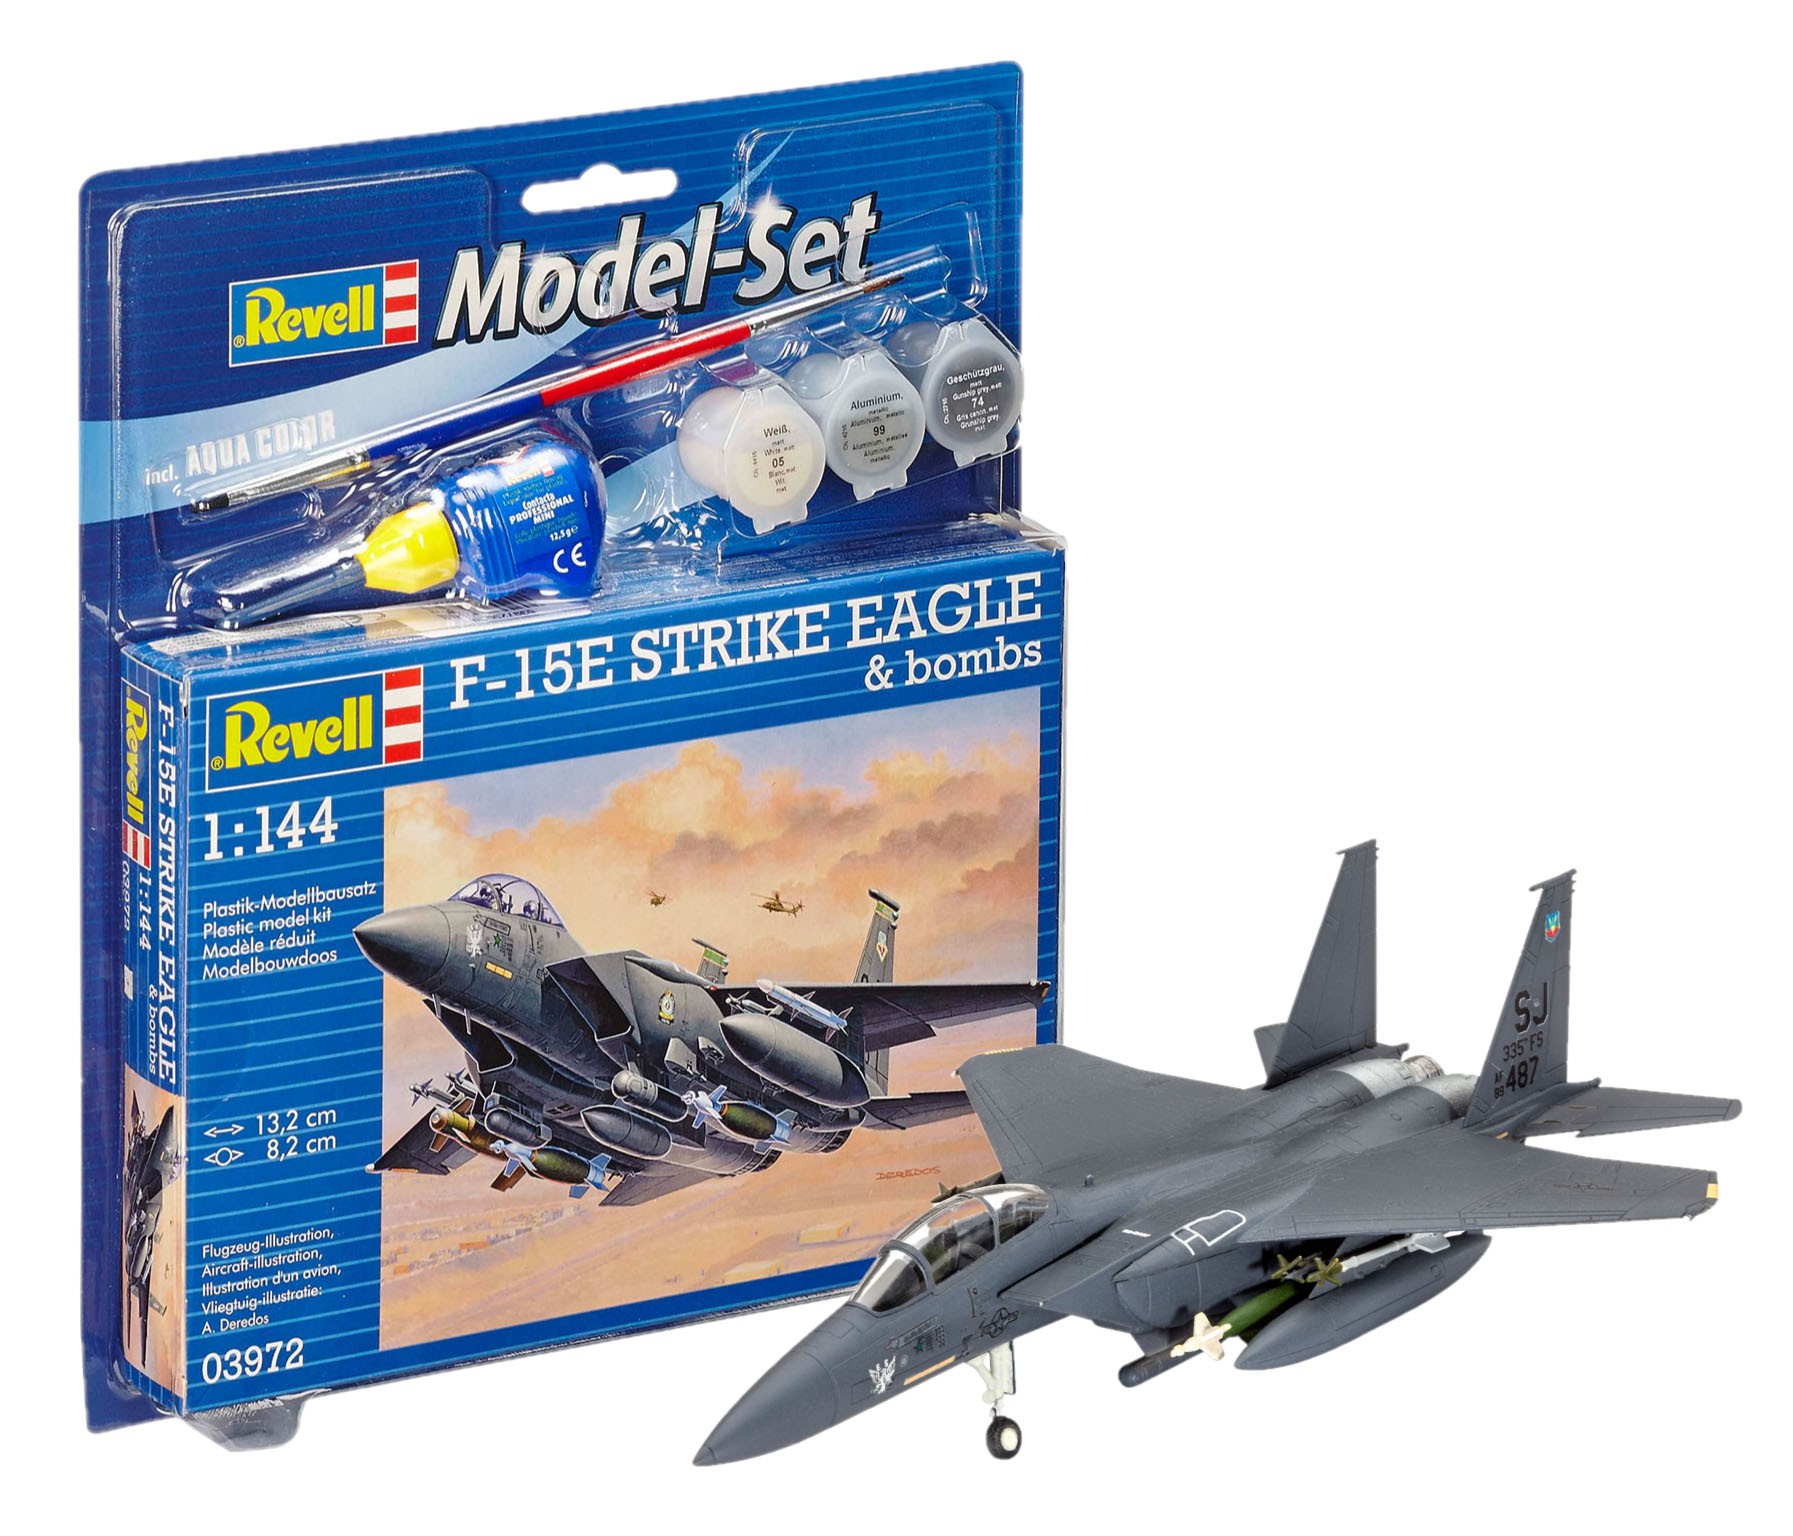 Revell 63972 F-15E STRIKE EAGLE & bombs  1:144  Model Set 